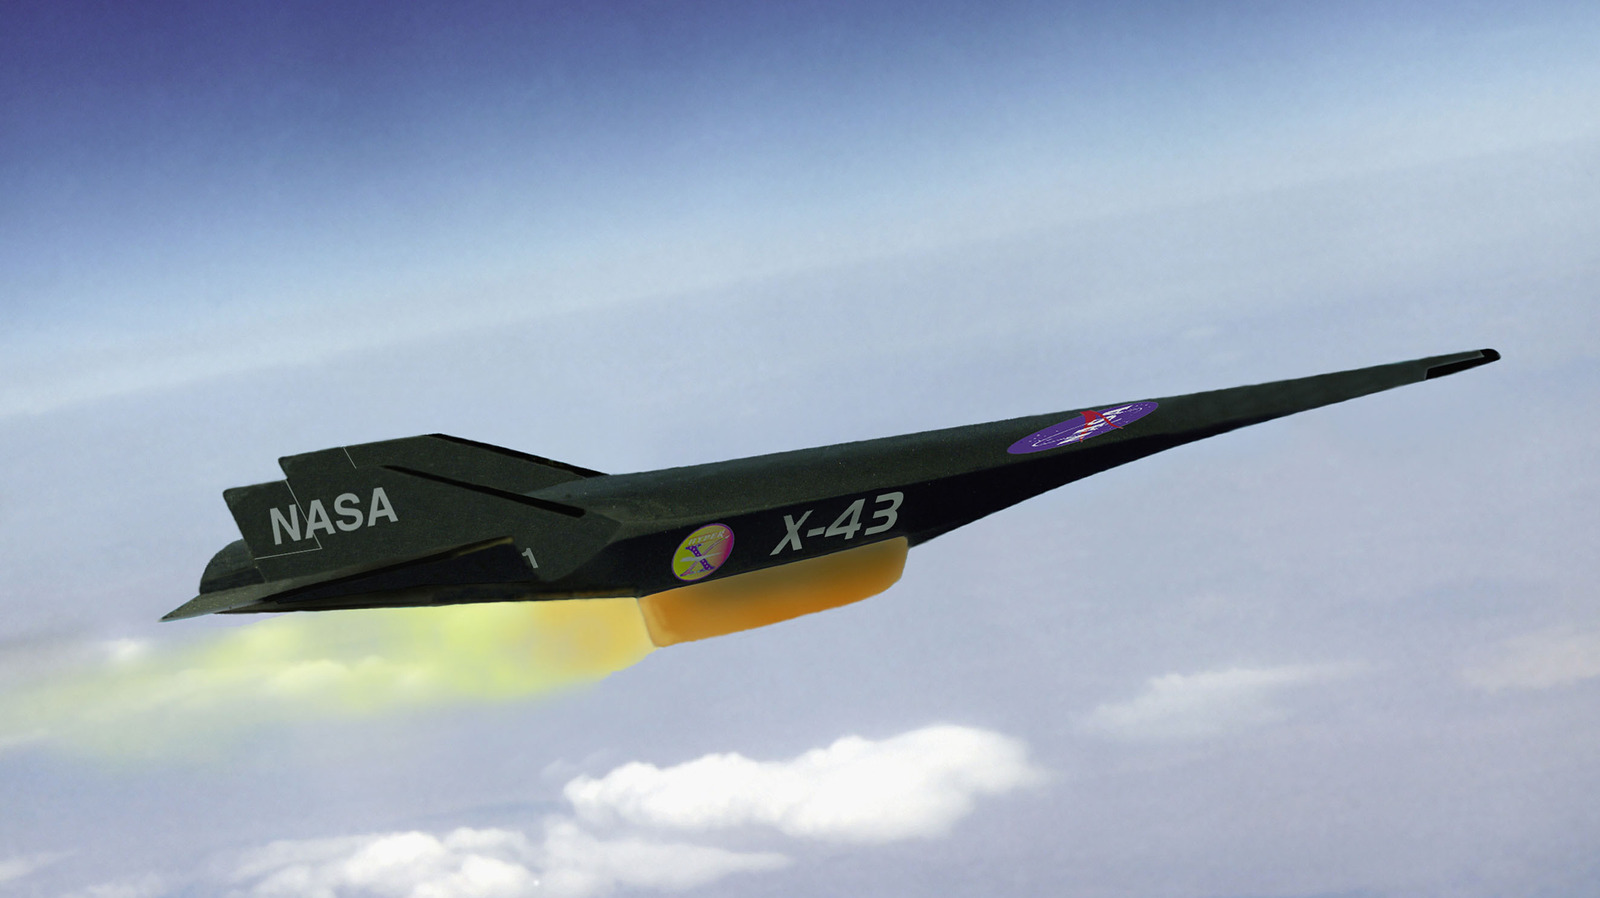 X-43A: The Futuristic Scramjet-Powered Aircraft That Set New Records – SlashGear